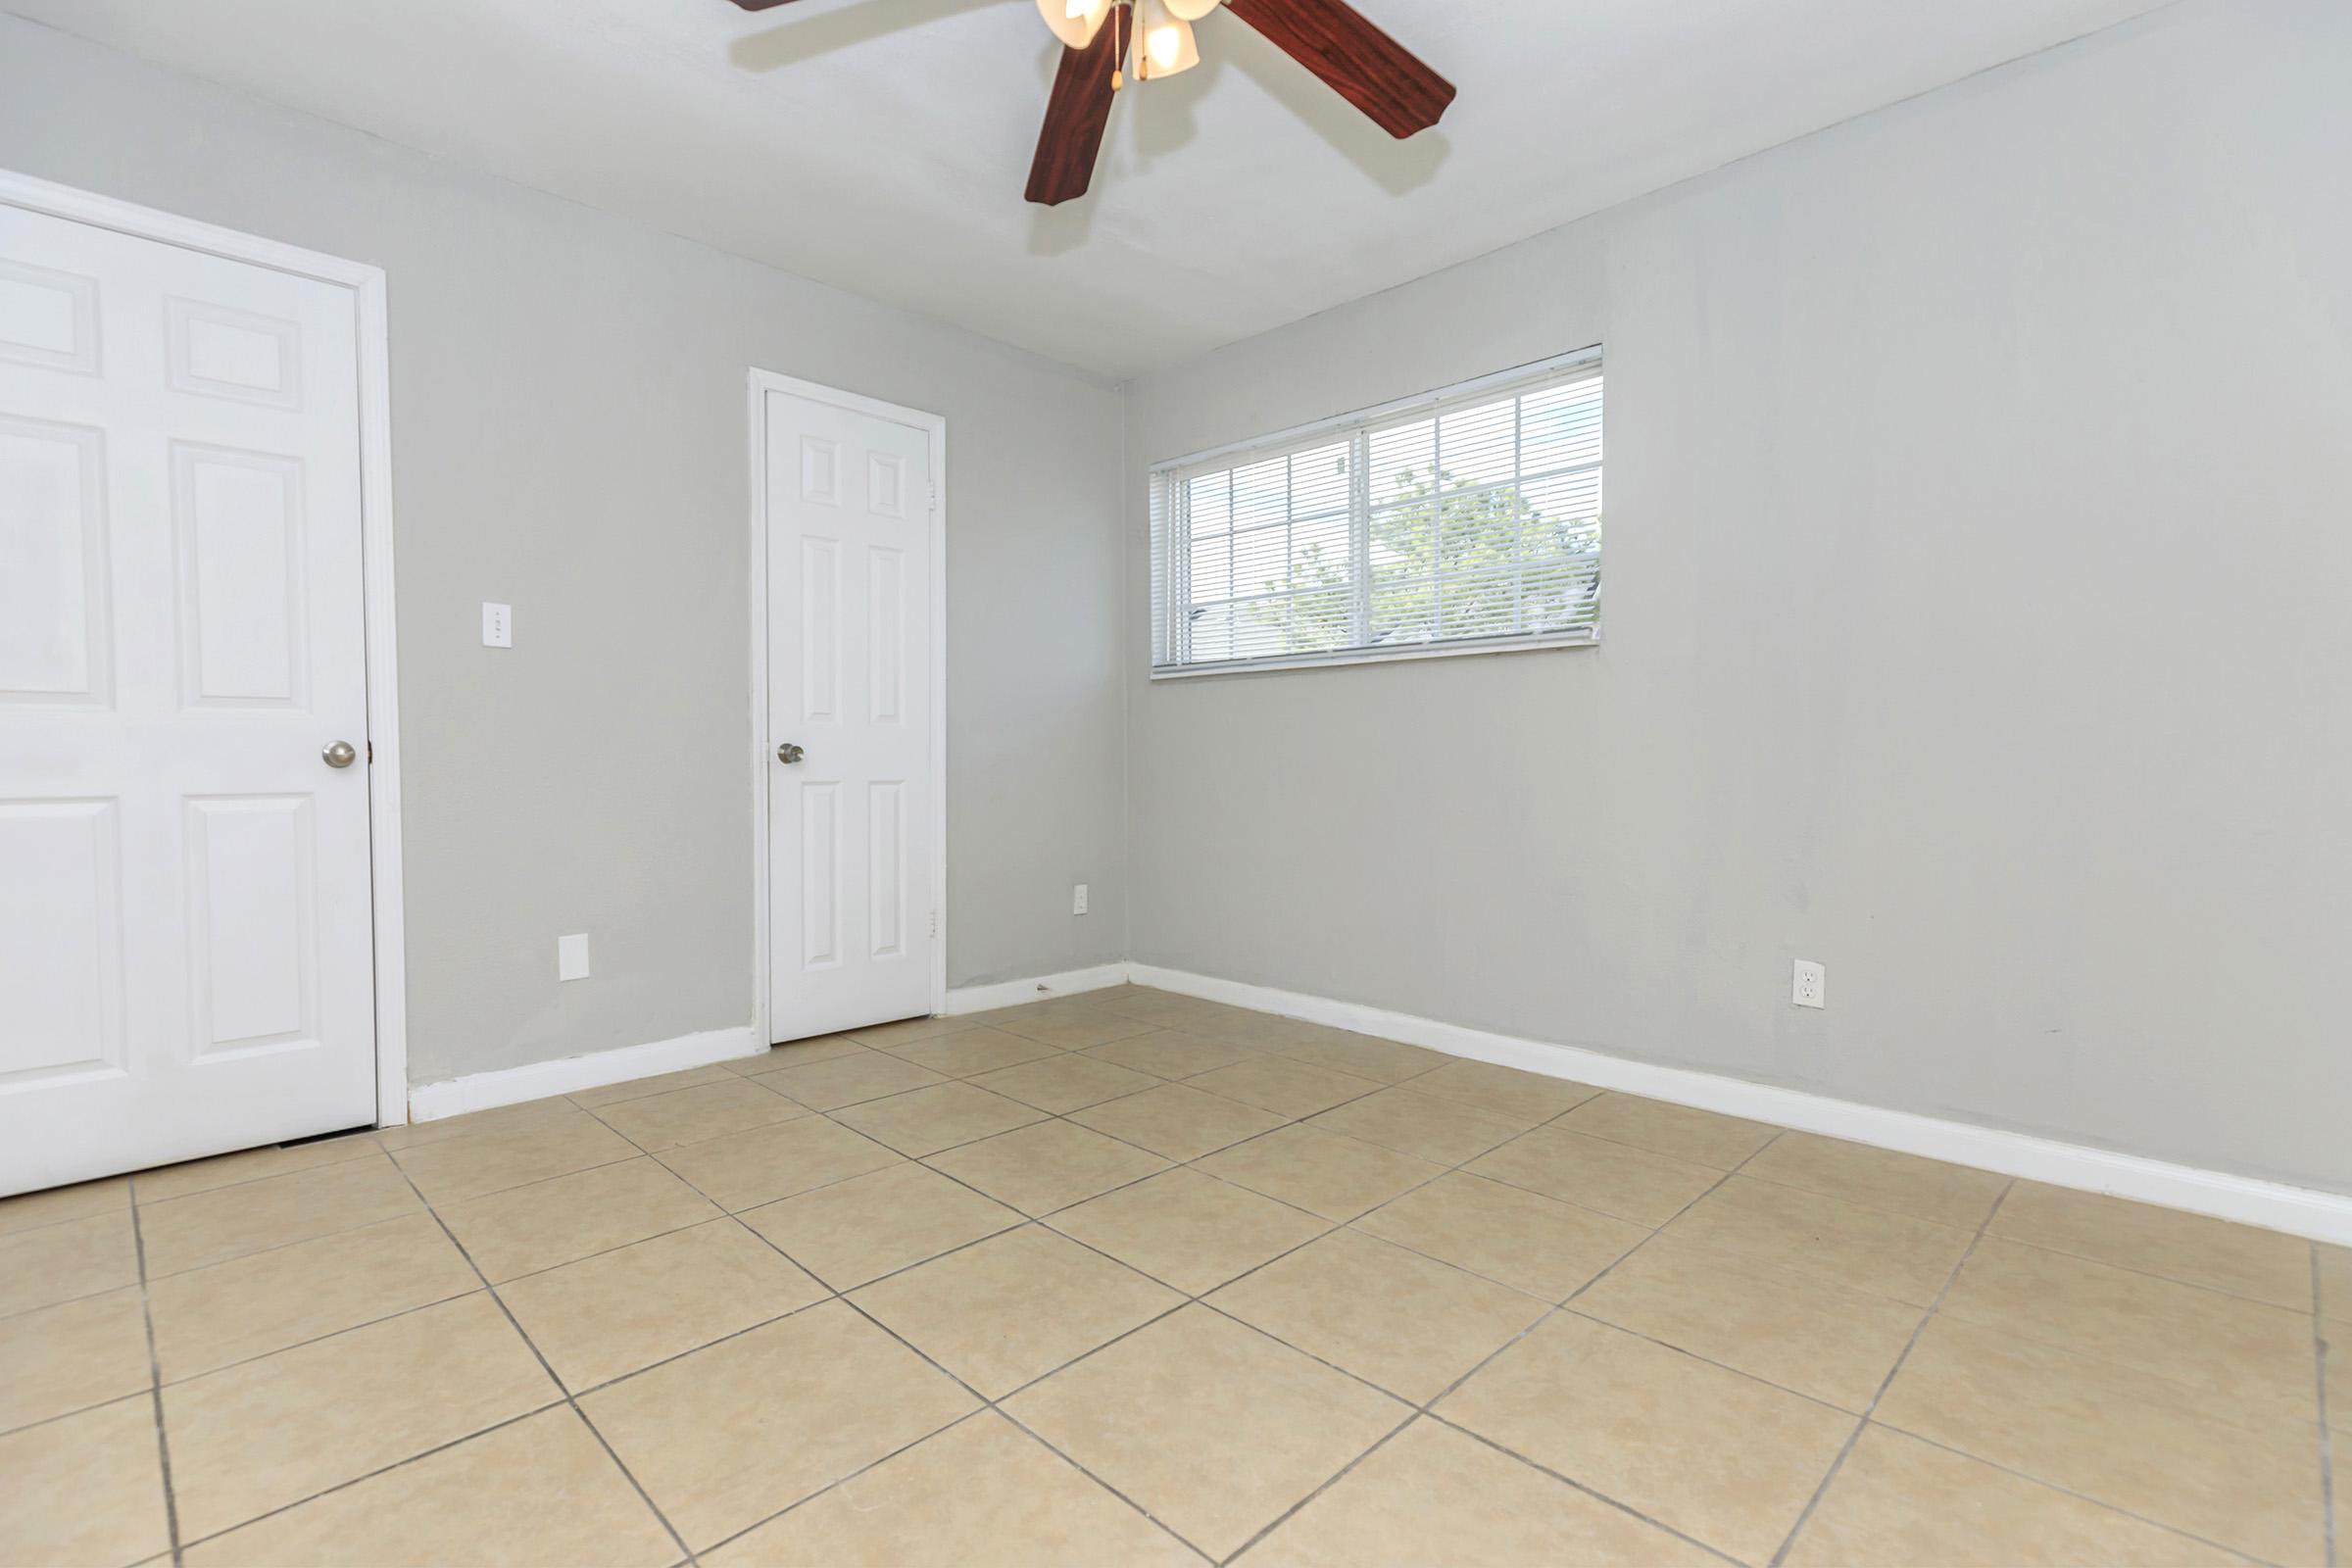 a room with a tiled floor